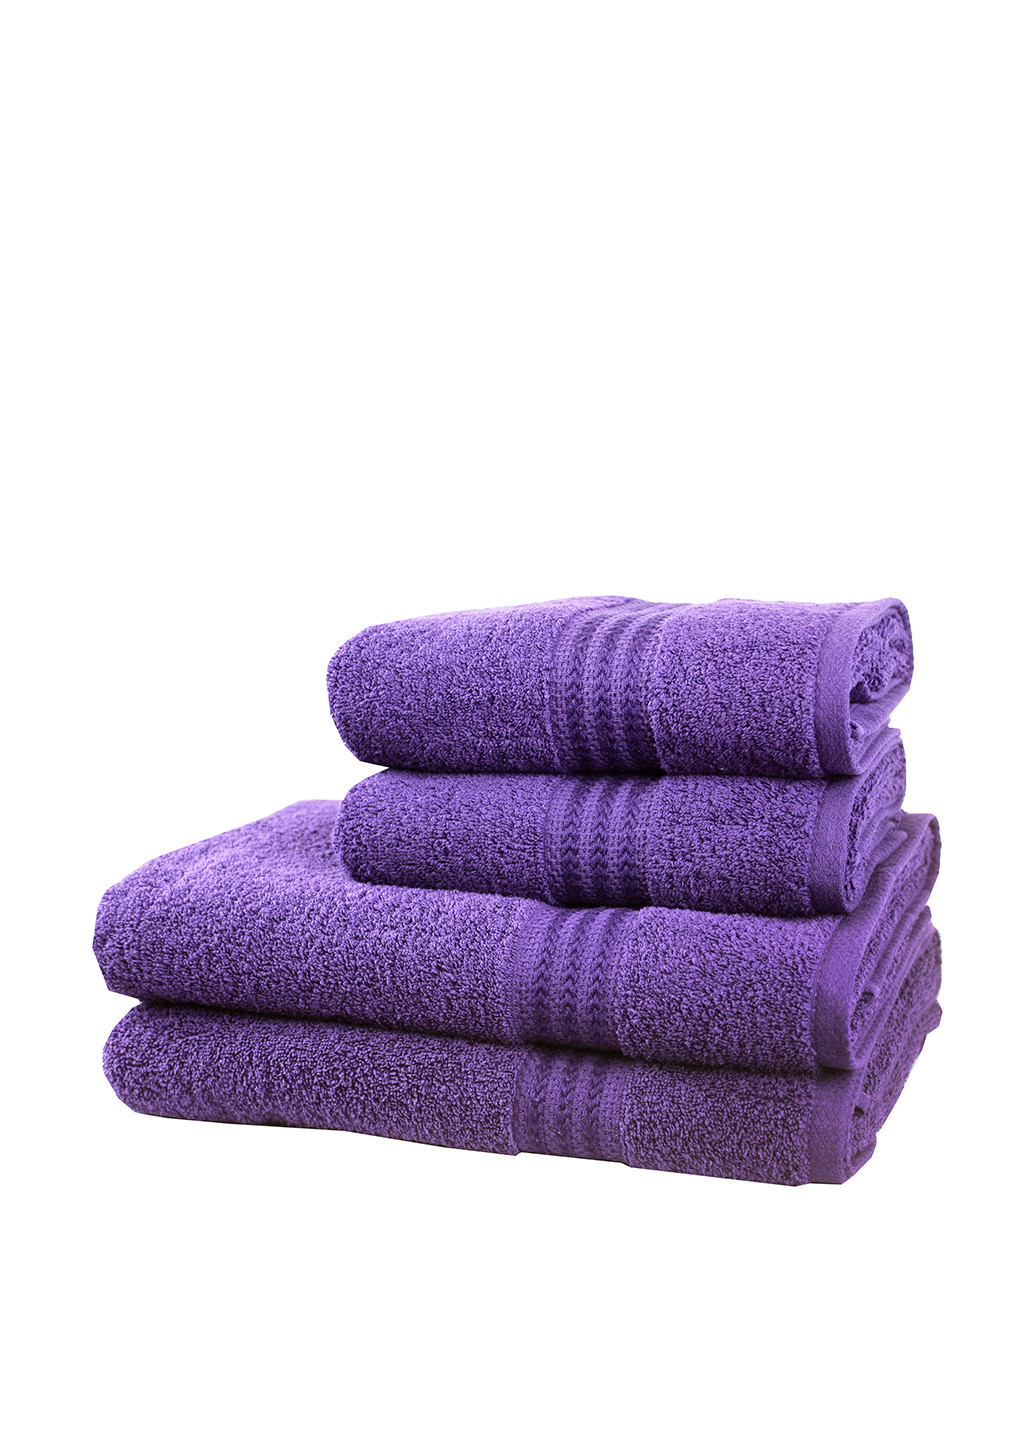 Hobby полотенце, 70х140 см однотонный фиолетовый производство - Турция